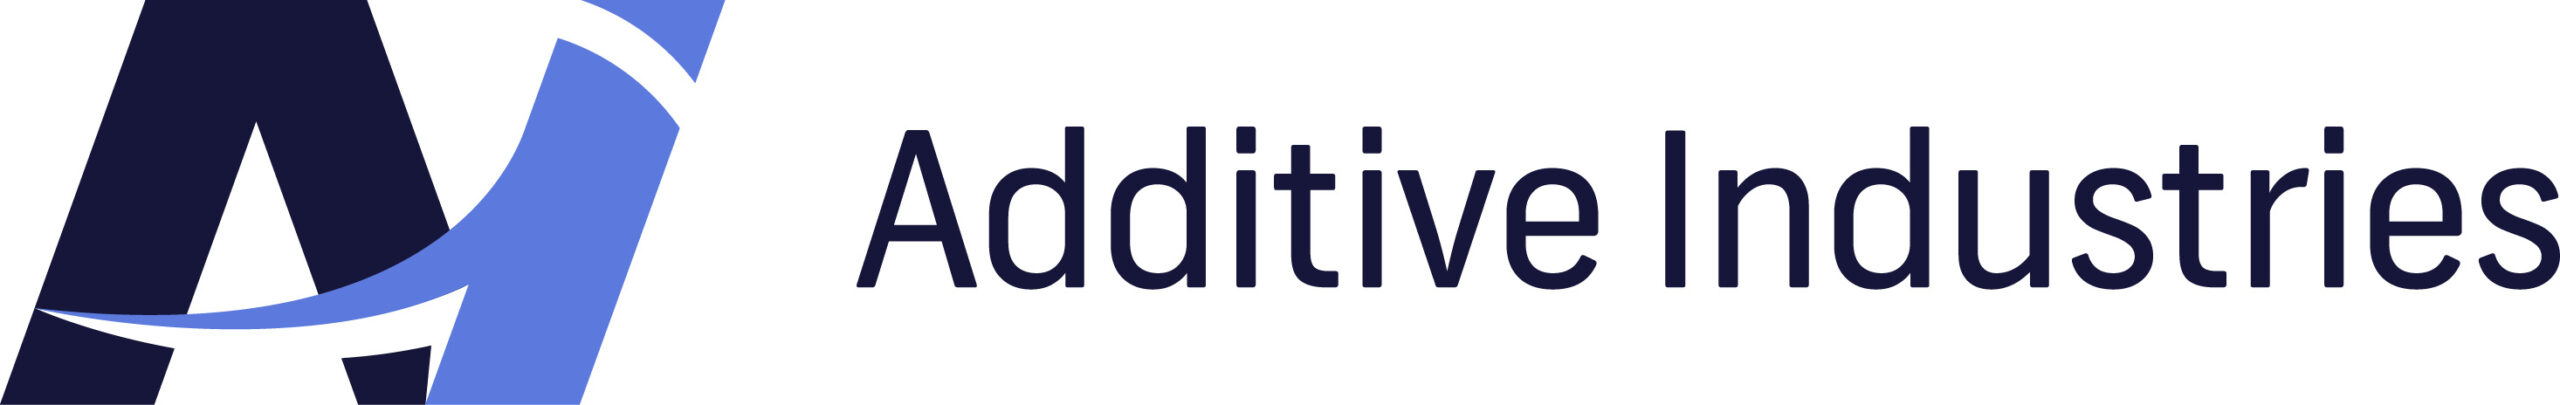 ADDITIVE INDUSTRIES Logo